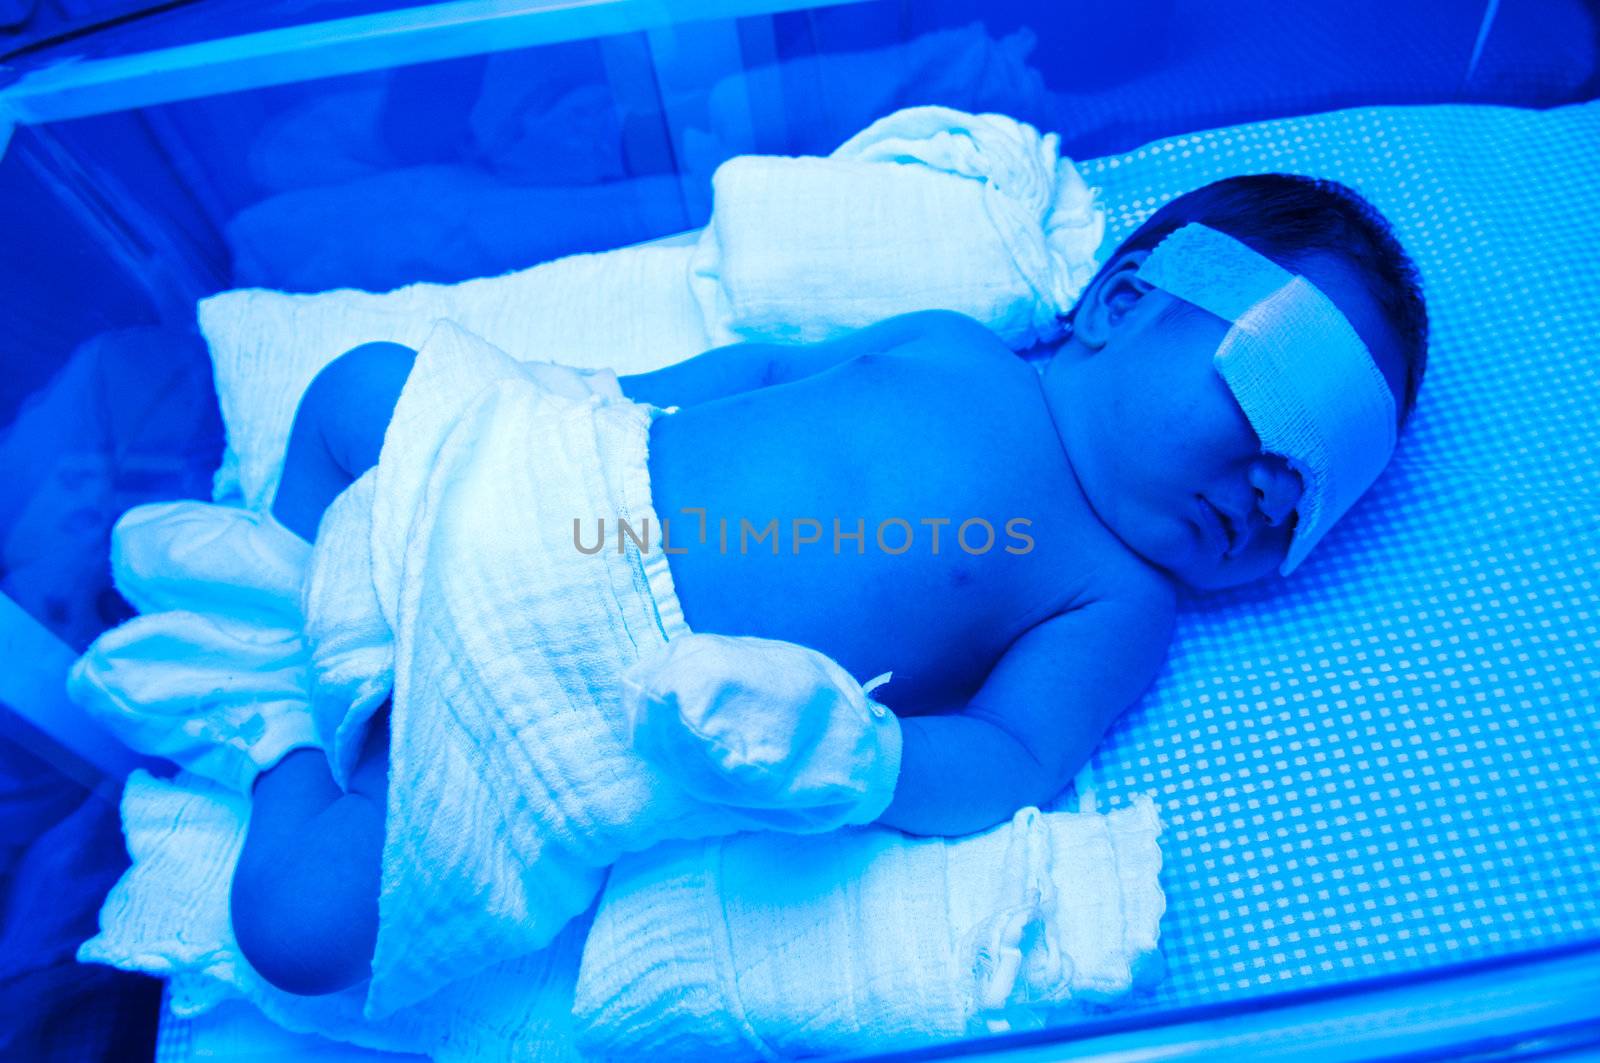 Newborn baby with jaundice under ultraviolet lamp in the incubator.